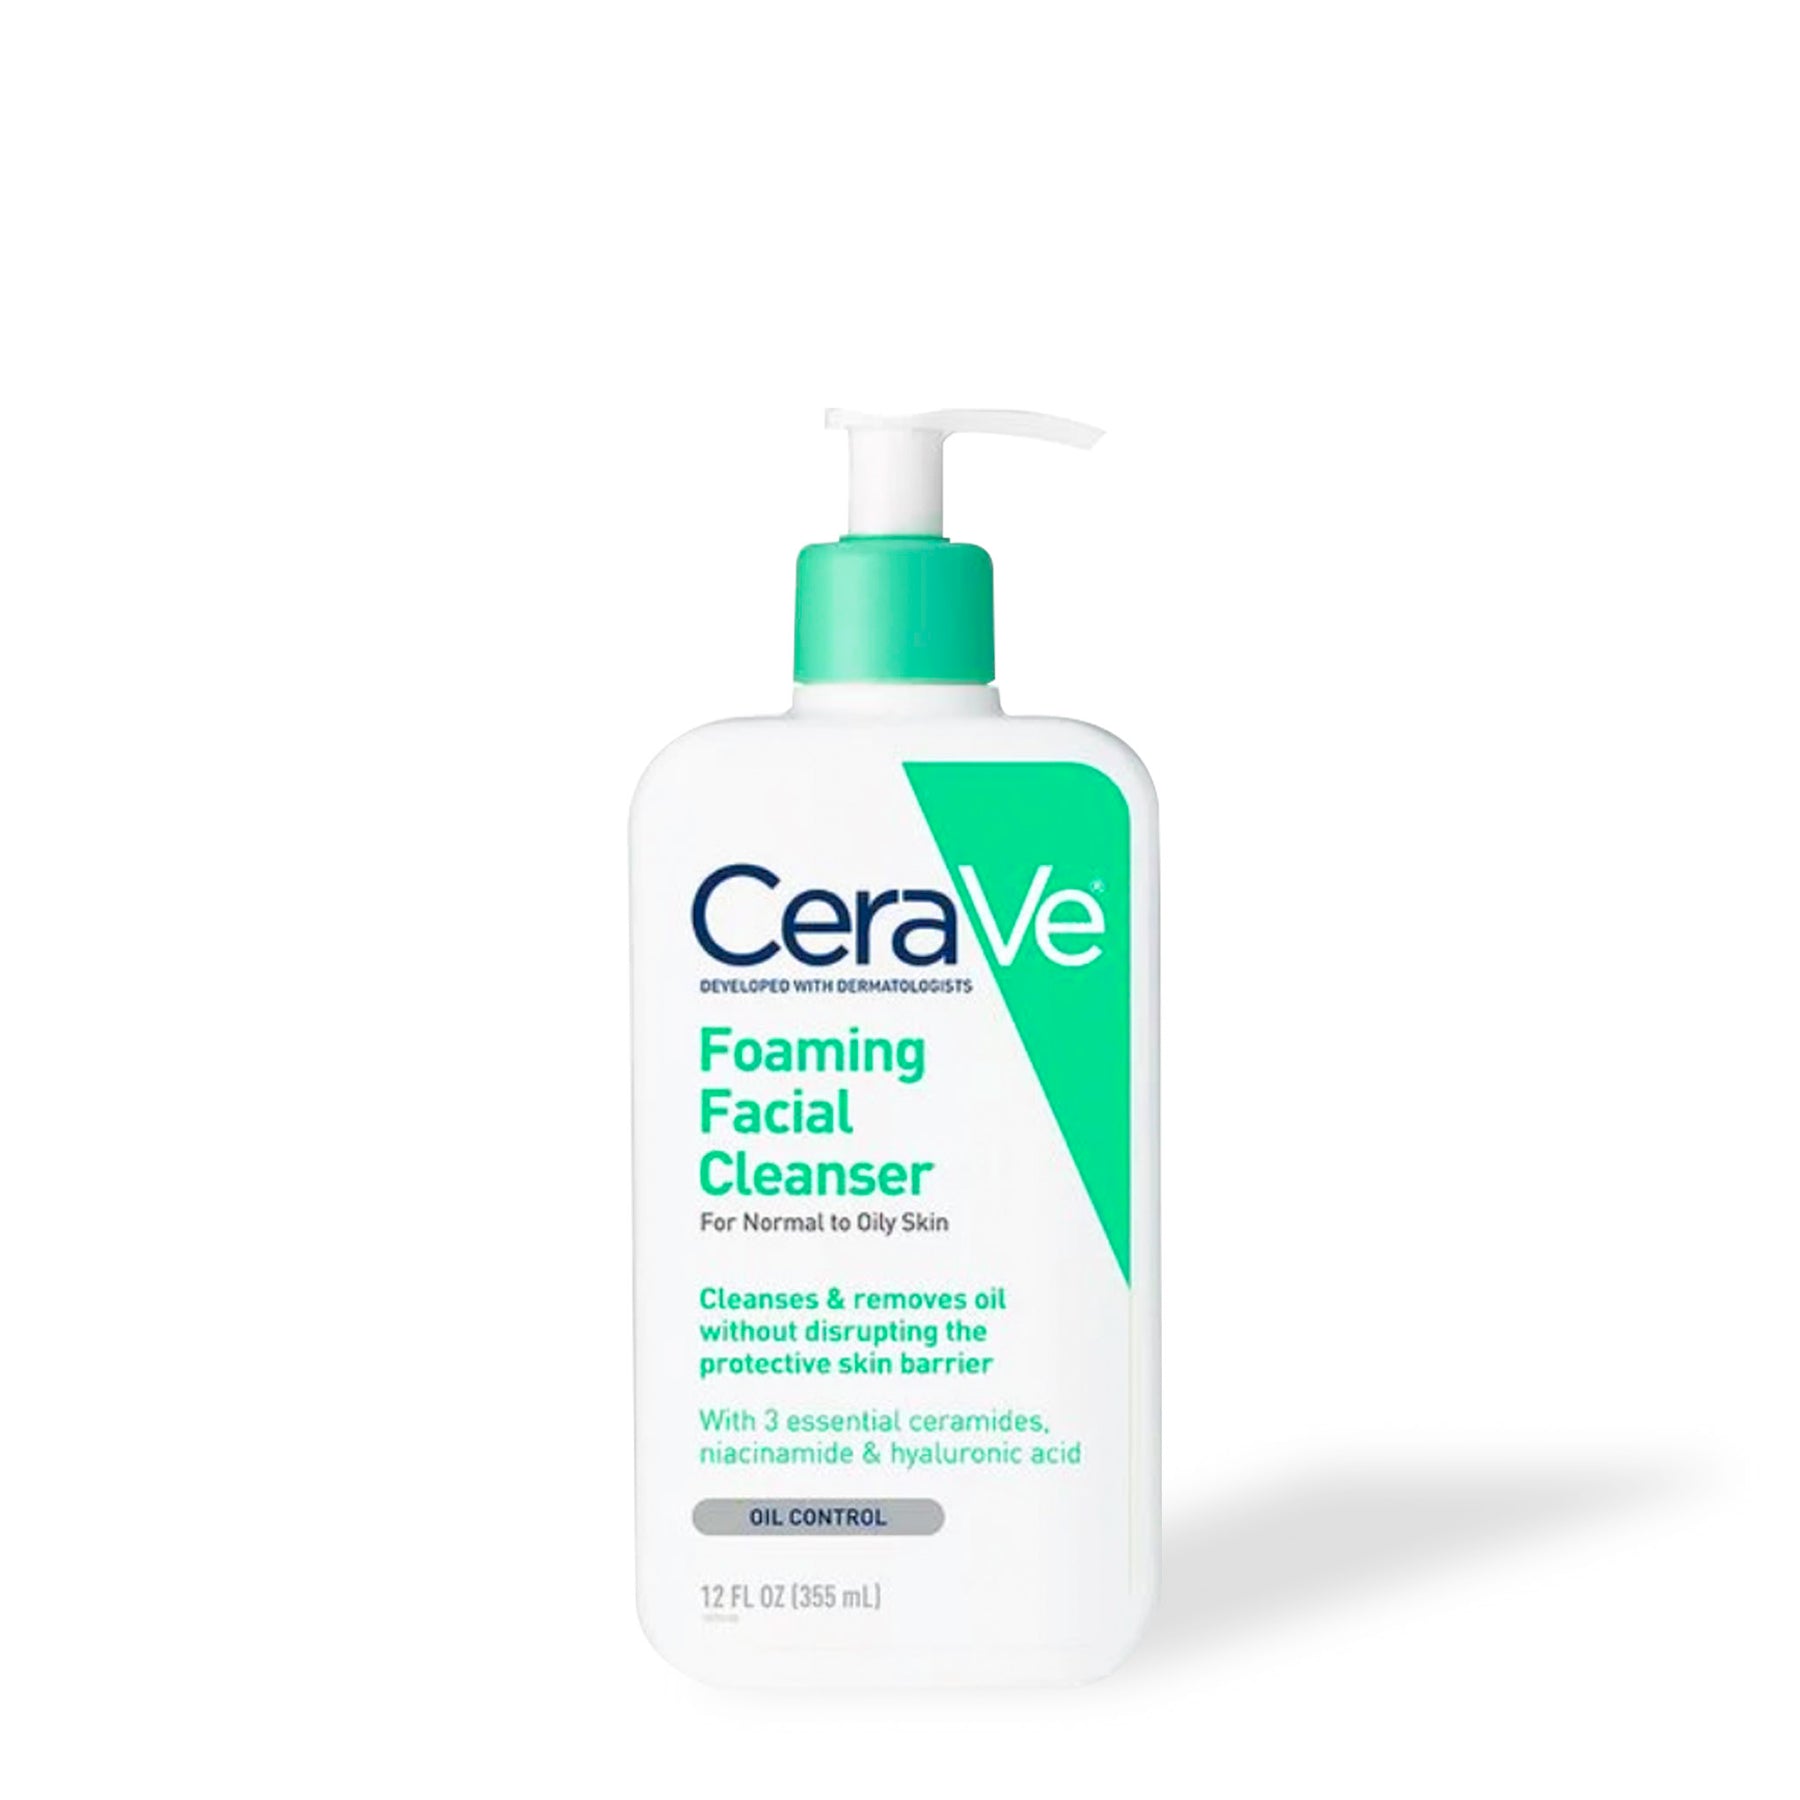 Cerave Foaming Facial Cleanser